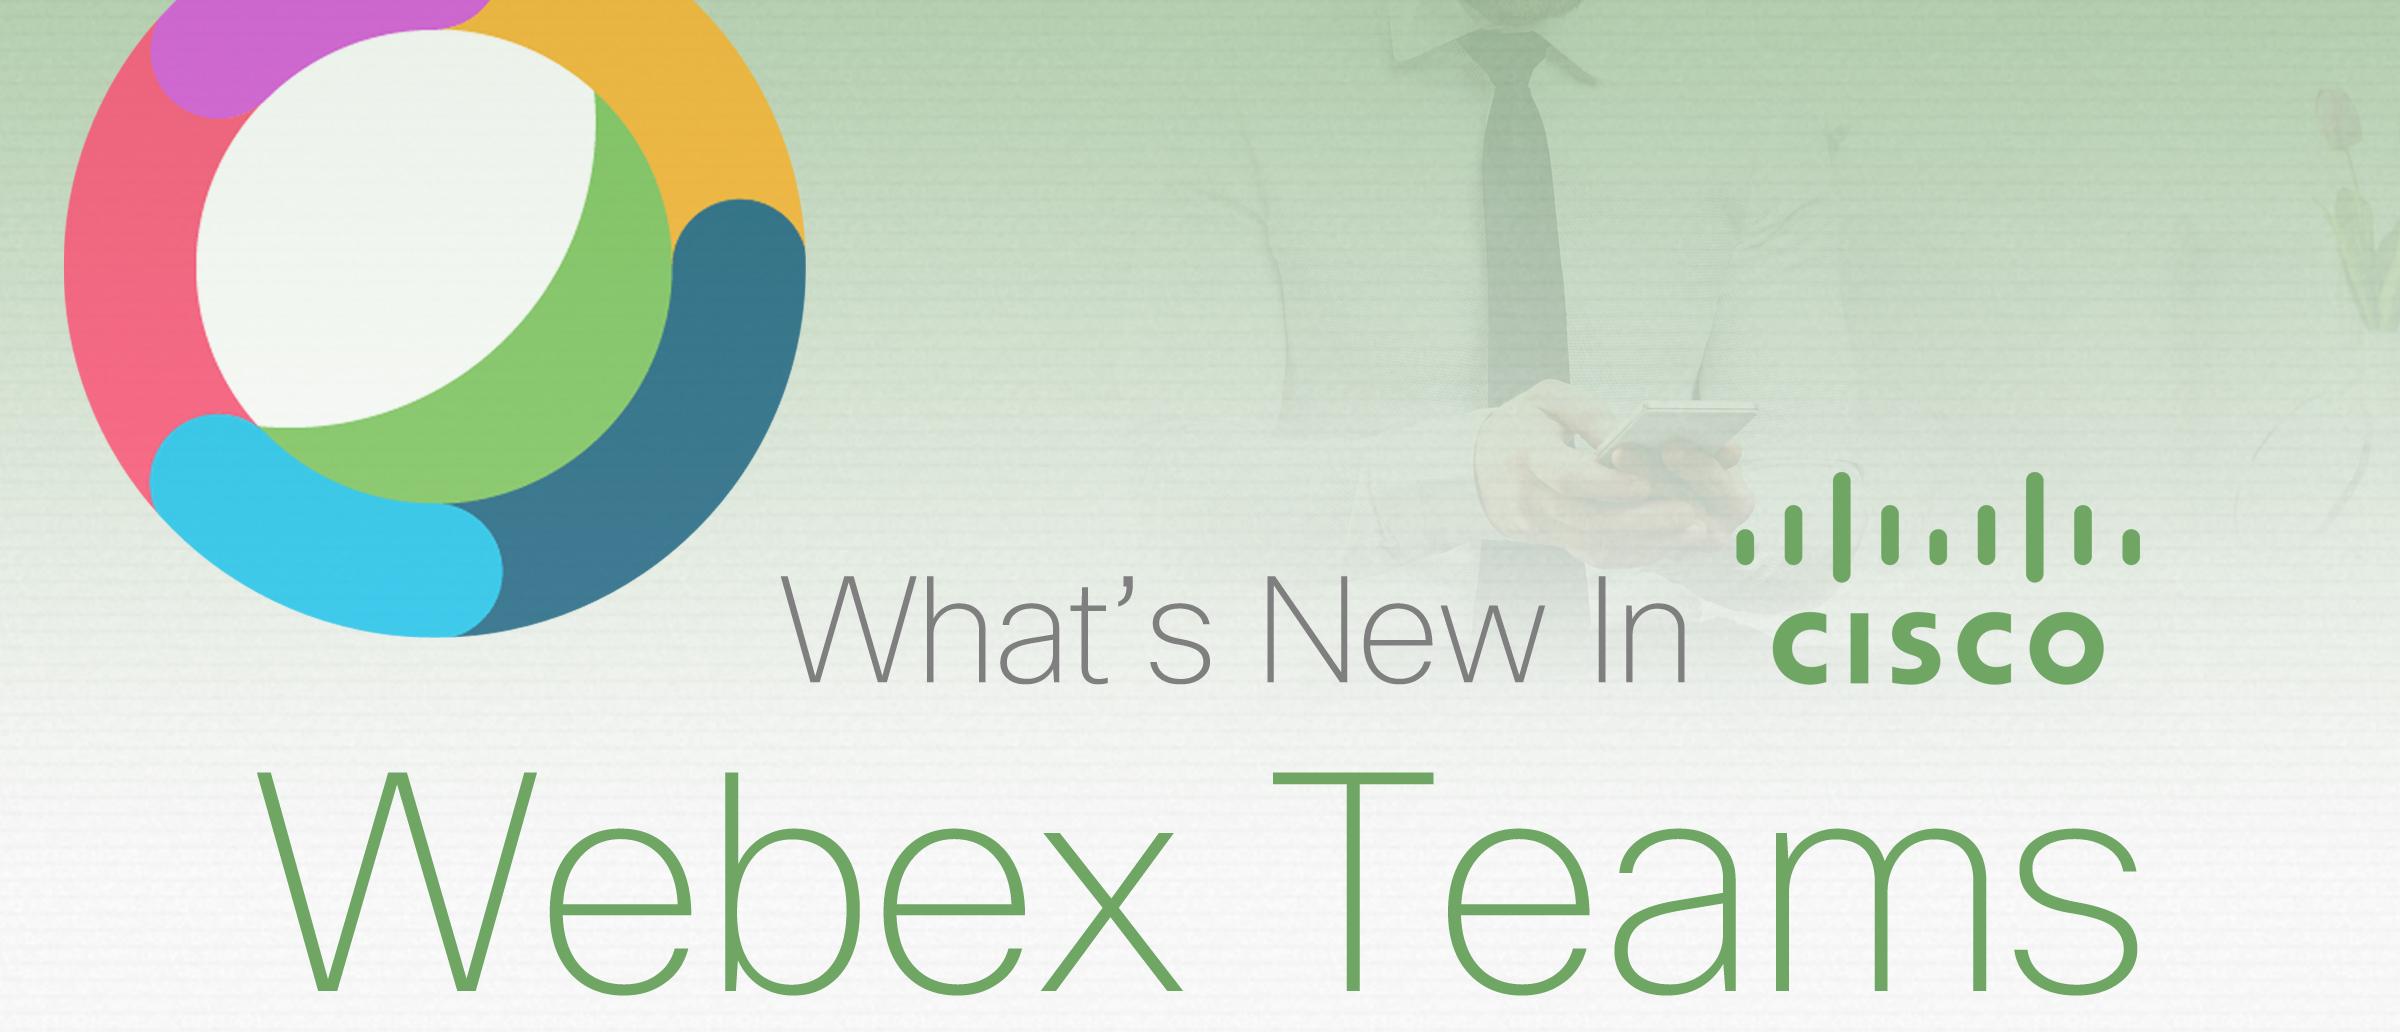 WebEx Team's Logo - Webex Teams Features - What's New In Webex Teams - October Update